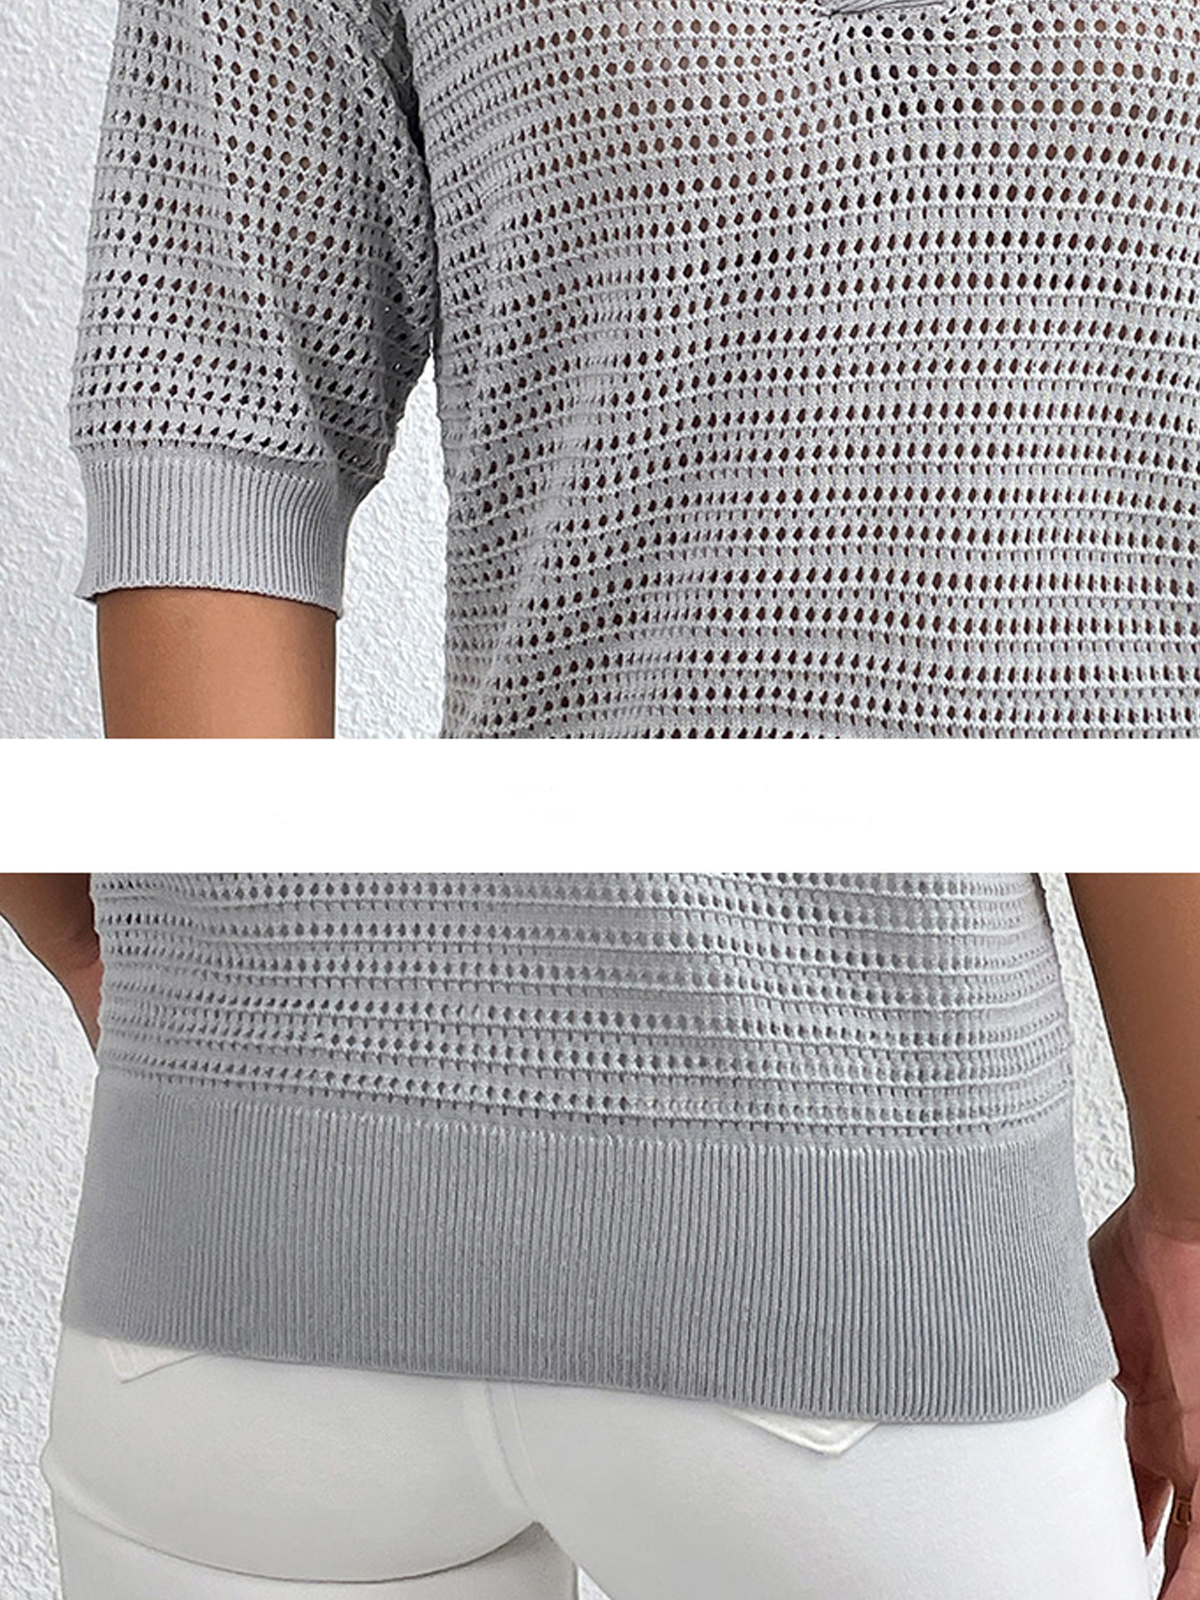 V Neck Short Sleeve Plain Buckle Regular Micro-Elasticity Loose Shirt For Women